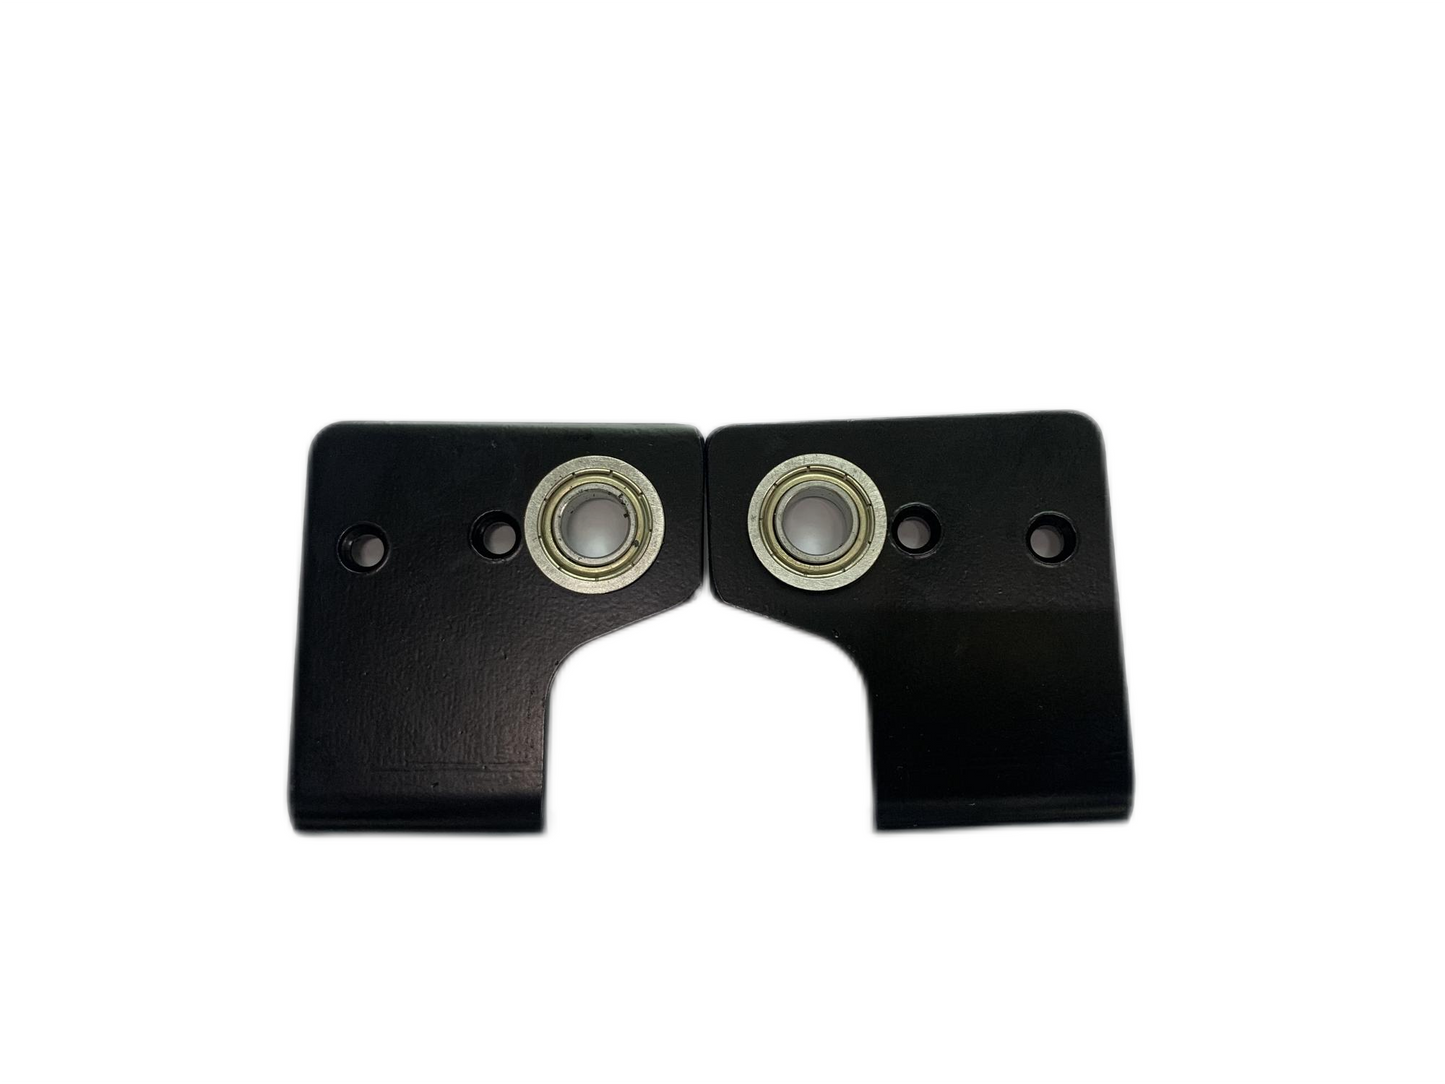 （Pre-sale）Monorim LR01 Turn signal & Projection Decorative Light for Segway Ninebot Max G30 LP, Scooter Blinker